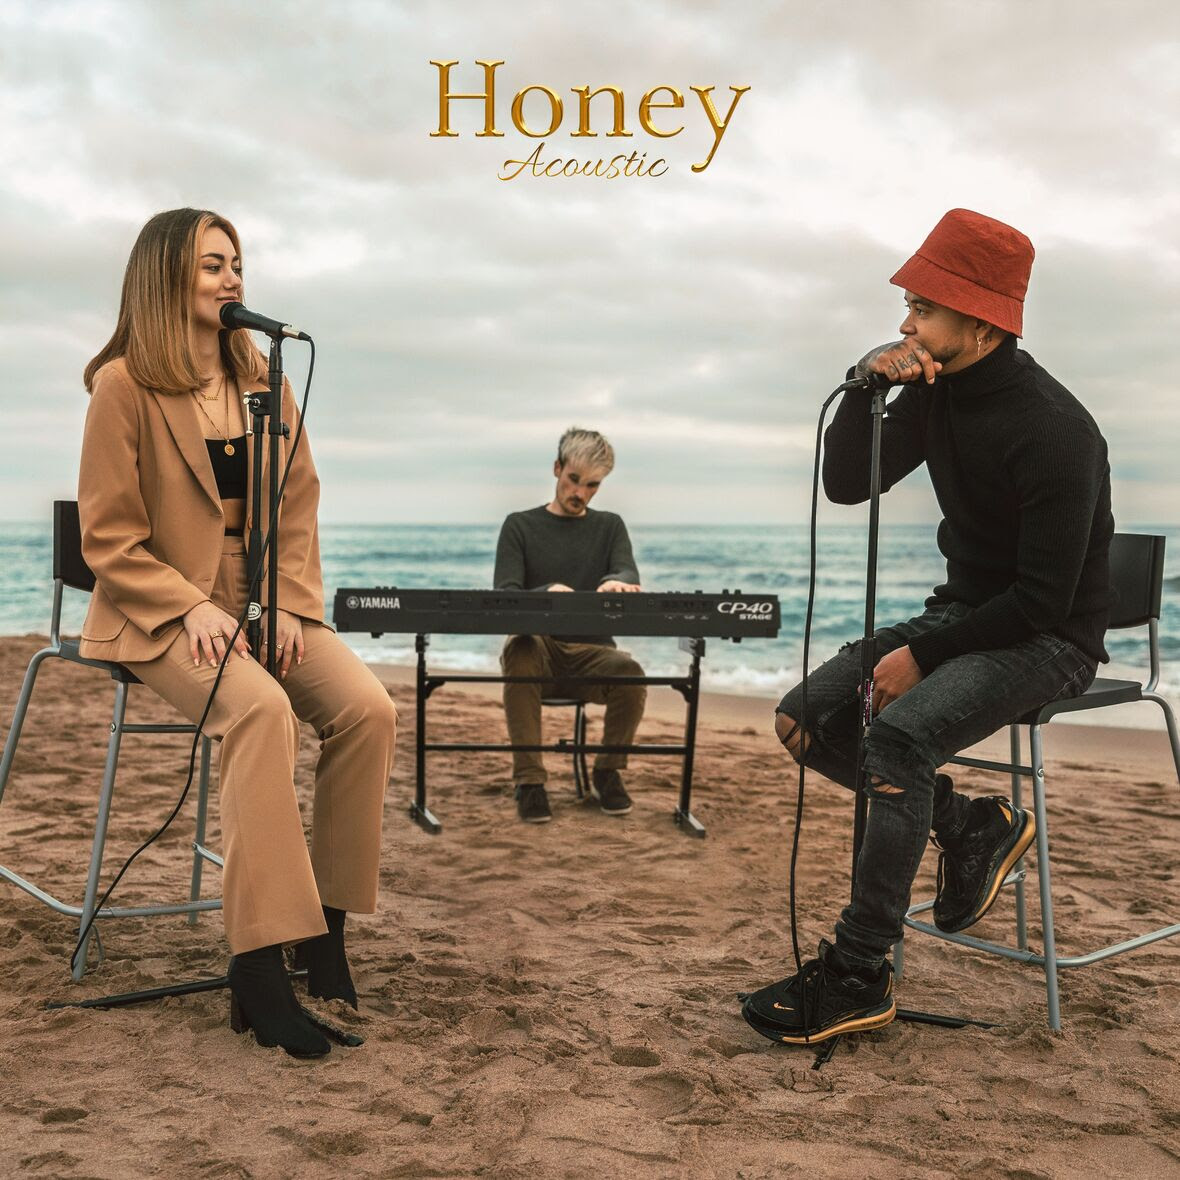 Honey Acoustic lo nuevo de Joanna Crass Feat DCS